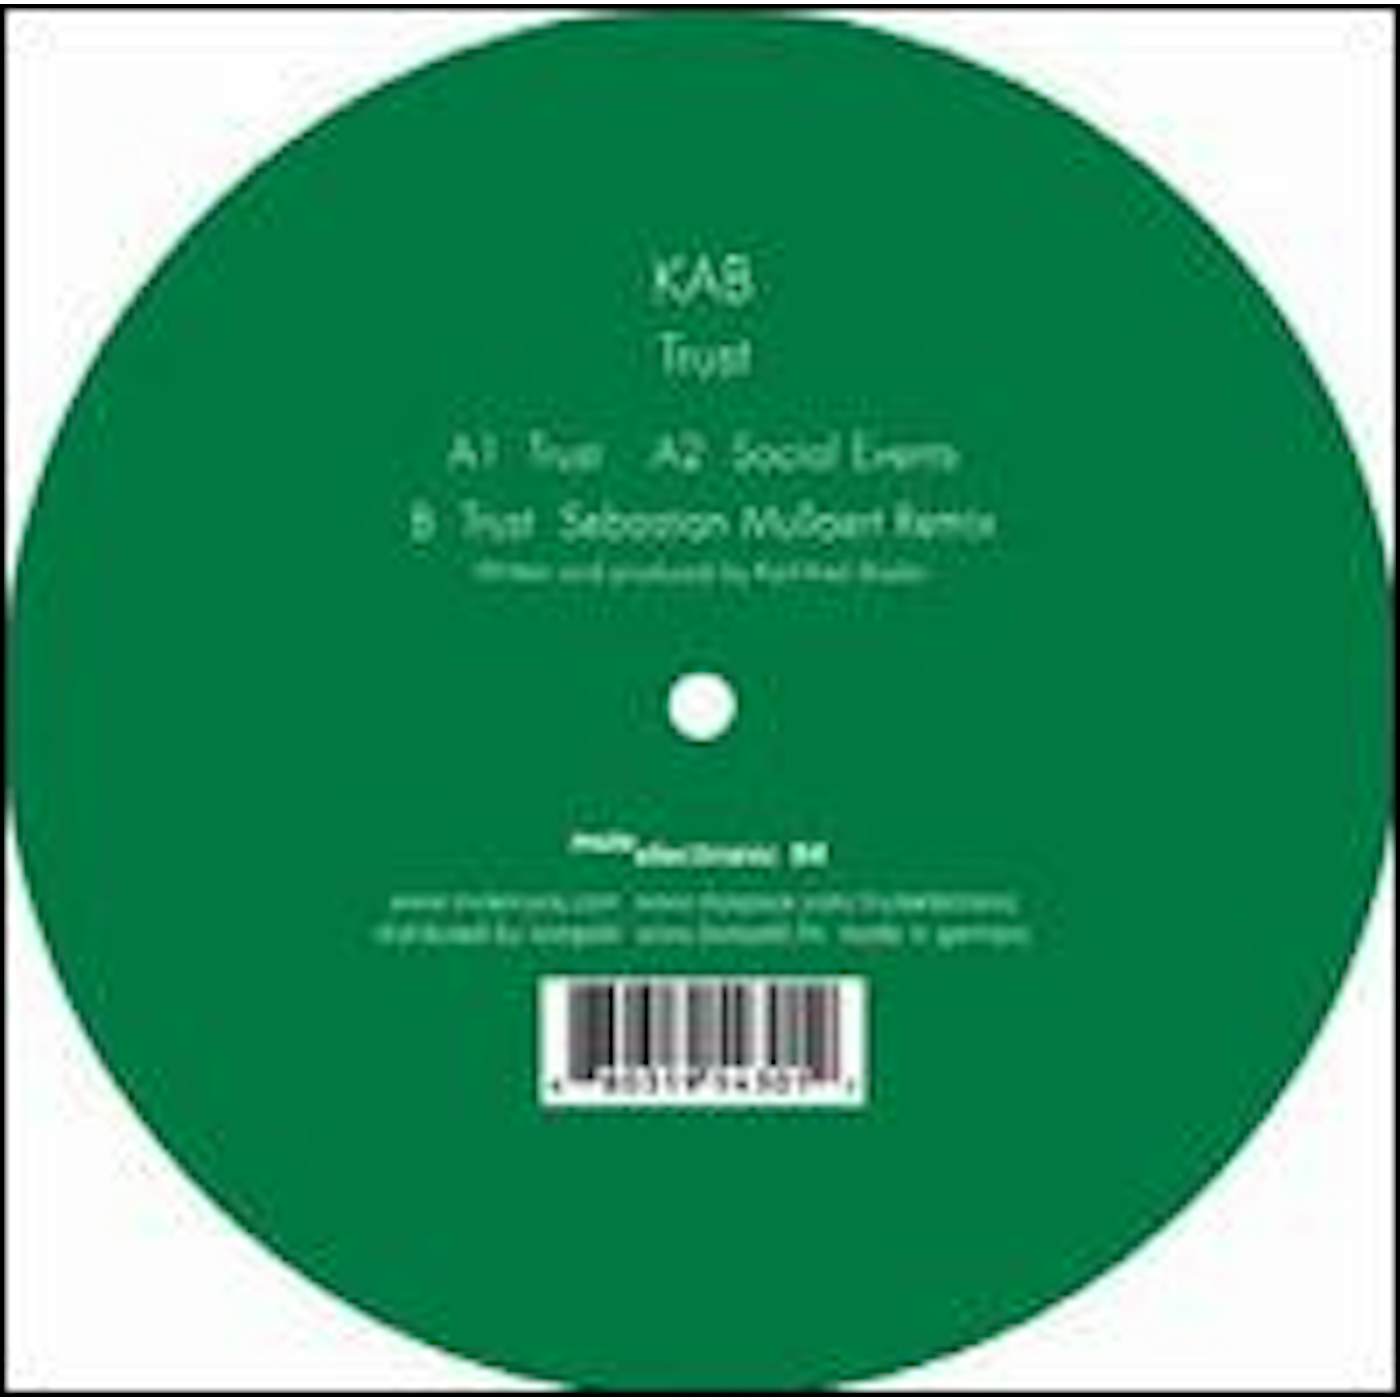 KAB Trust Vinyl Record